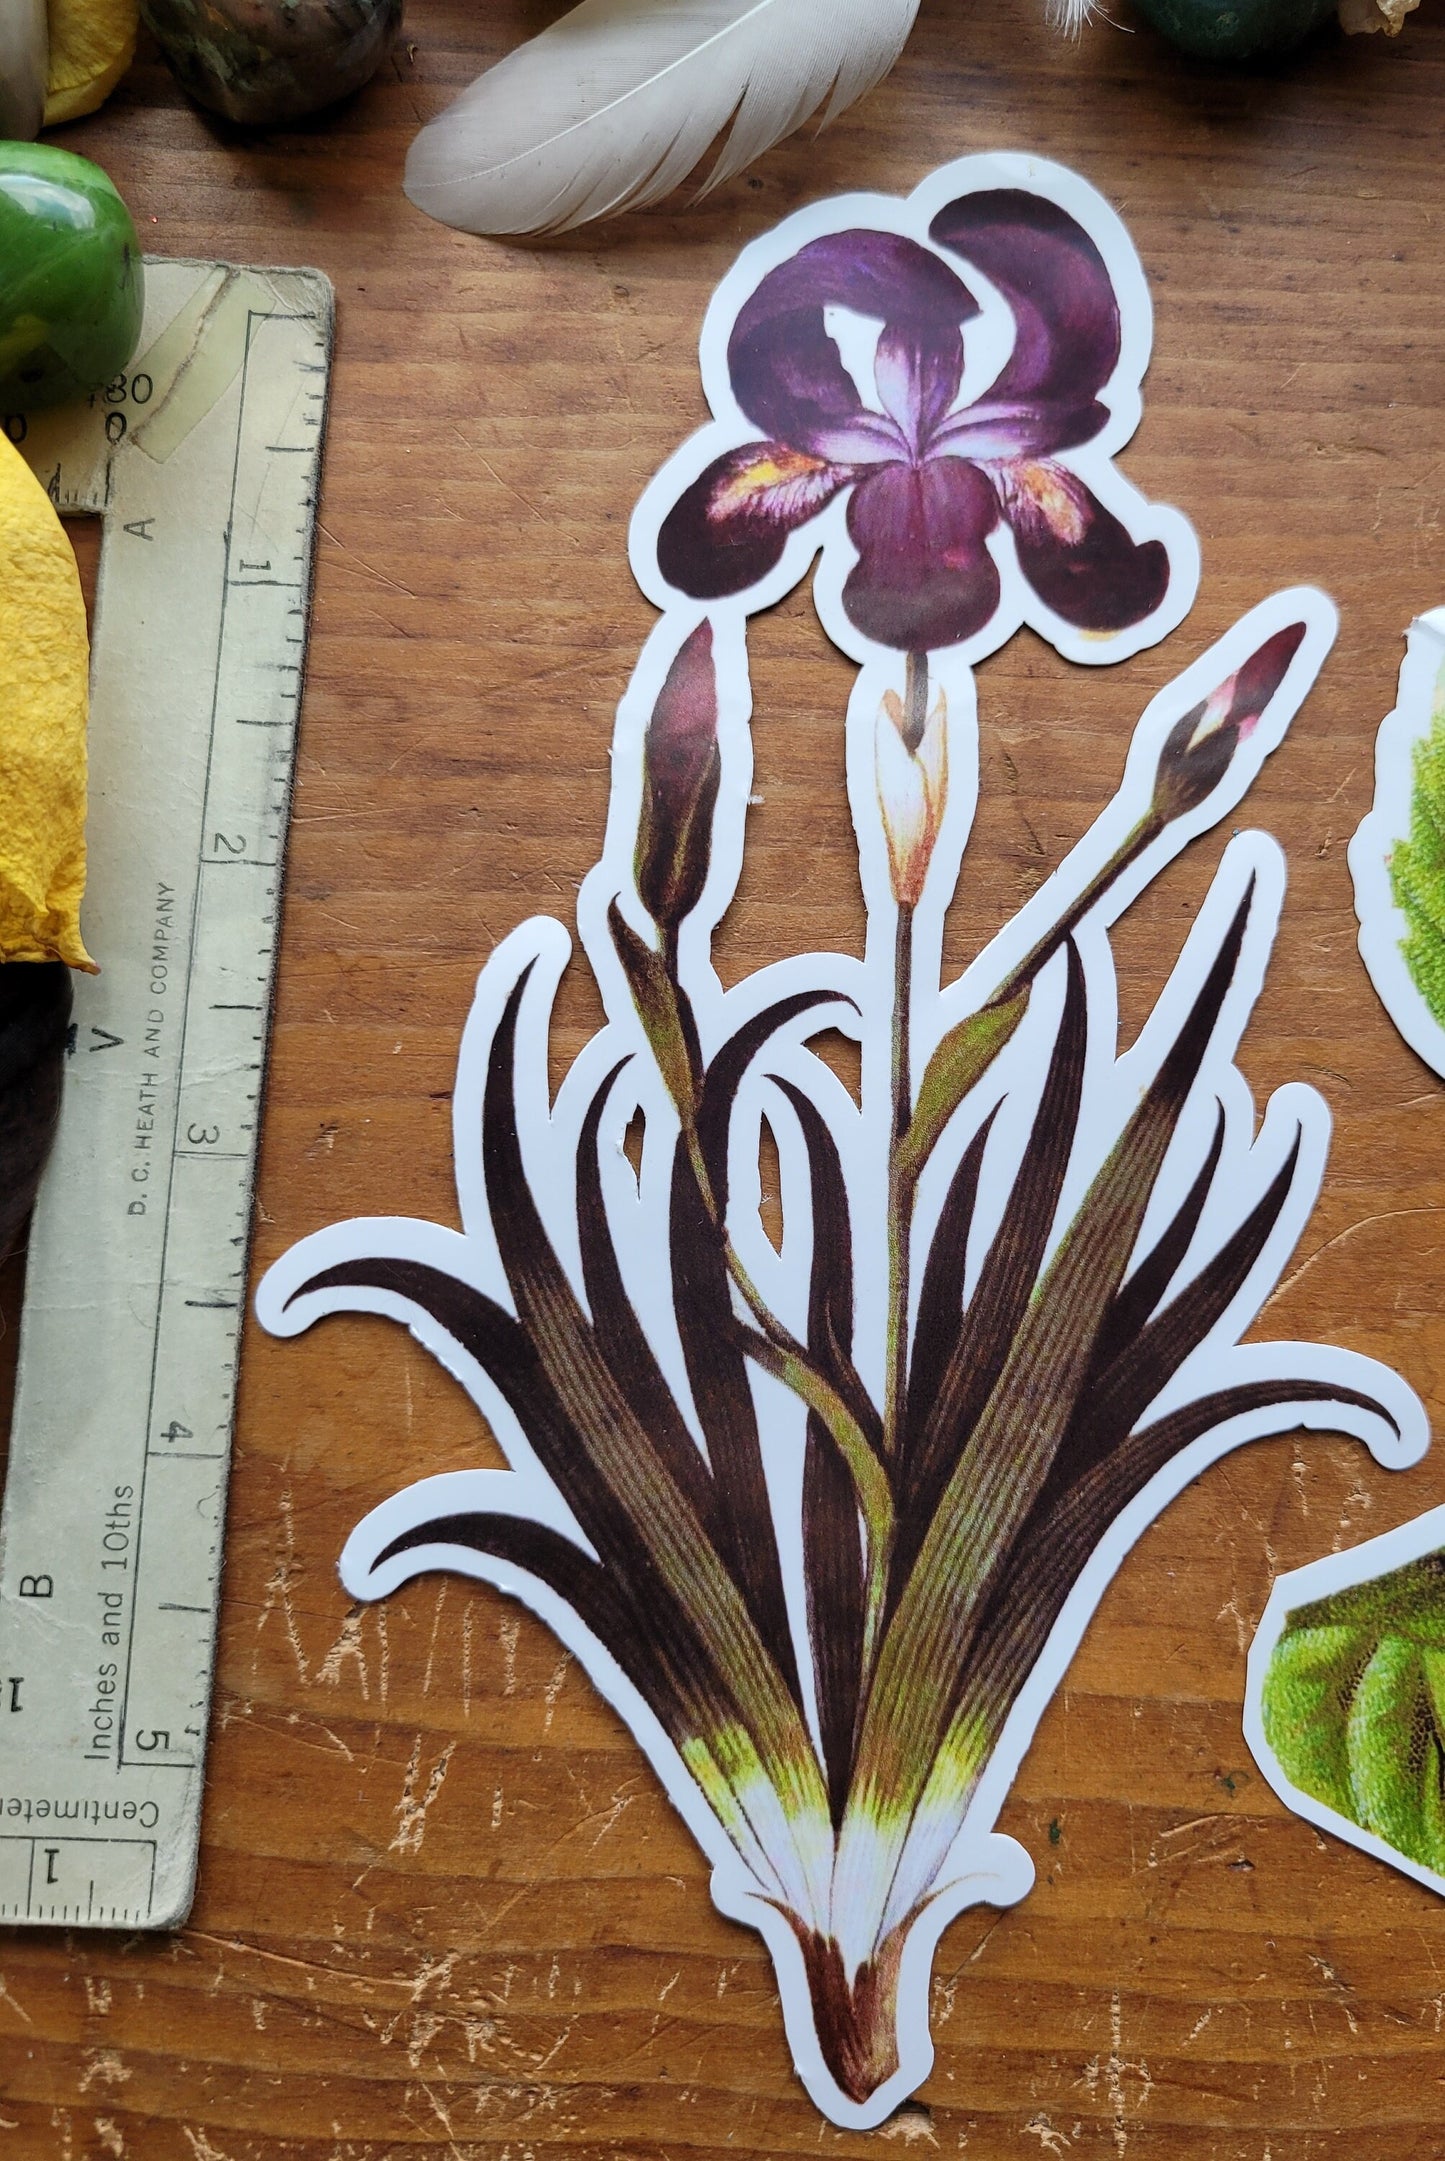 Extra Lage Flower Stickers- Sunflower and Iris